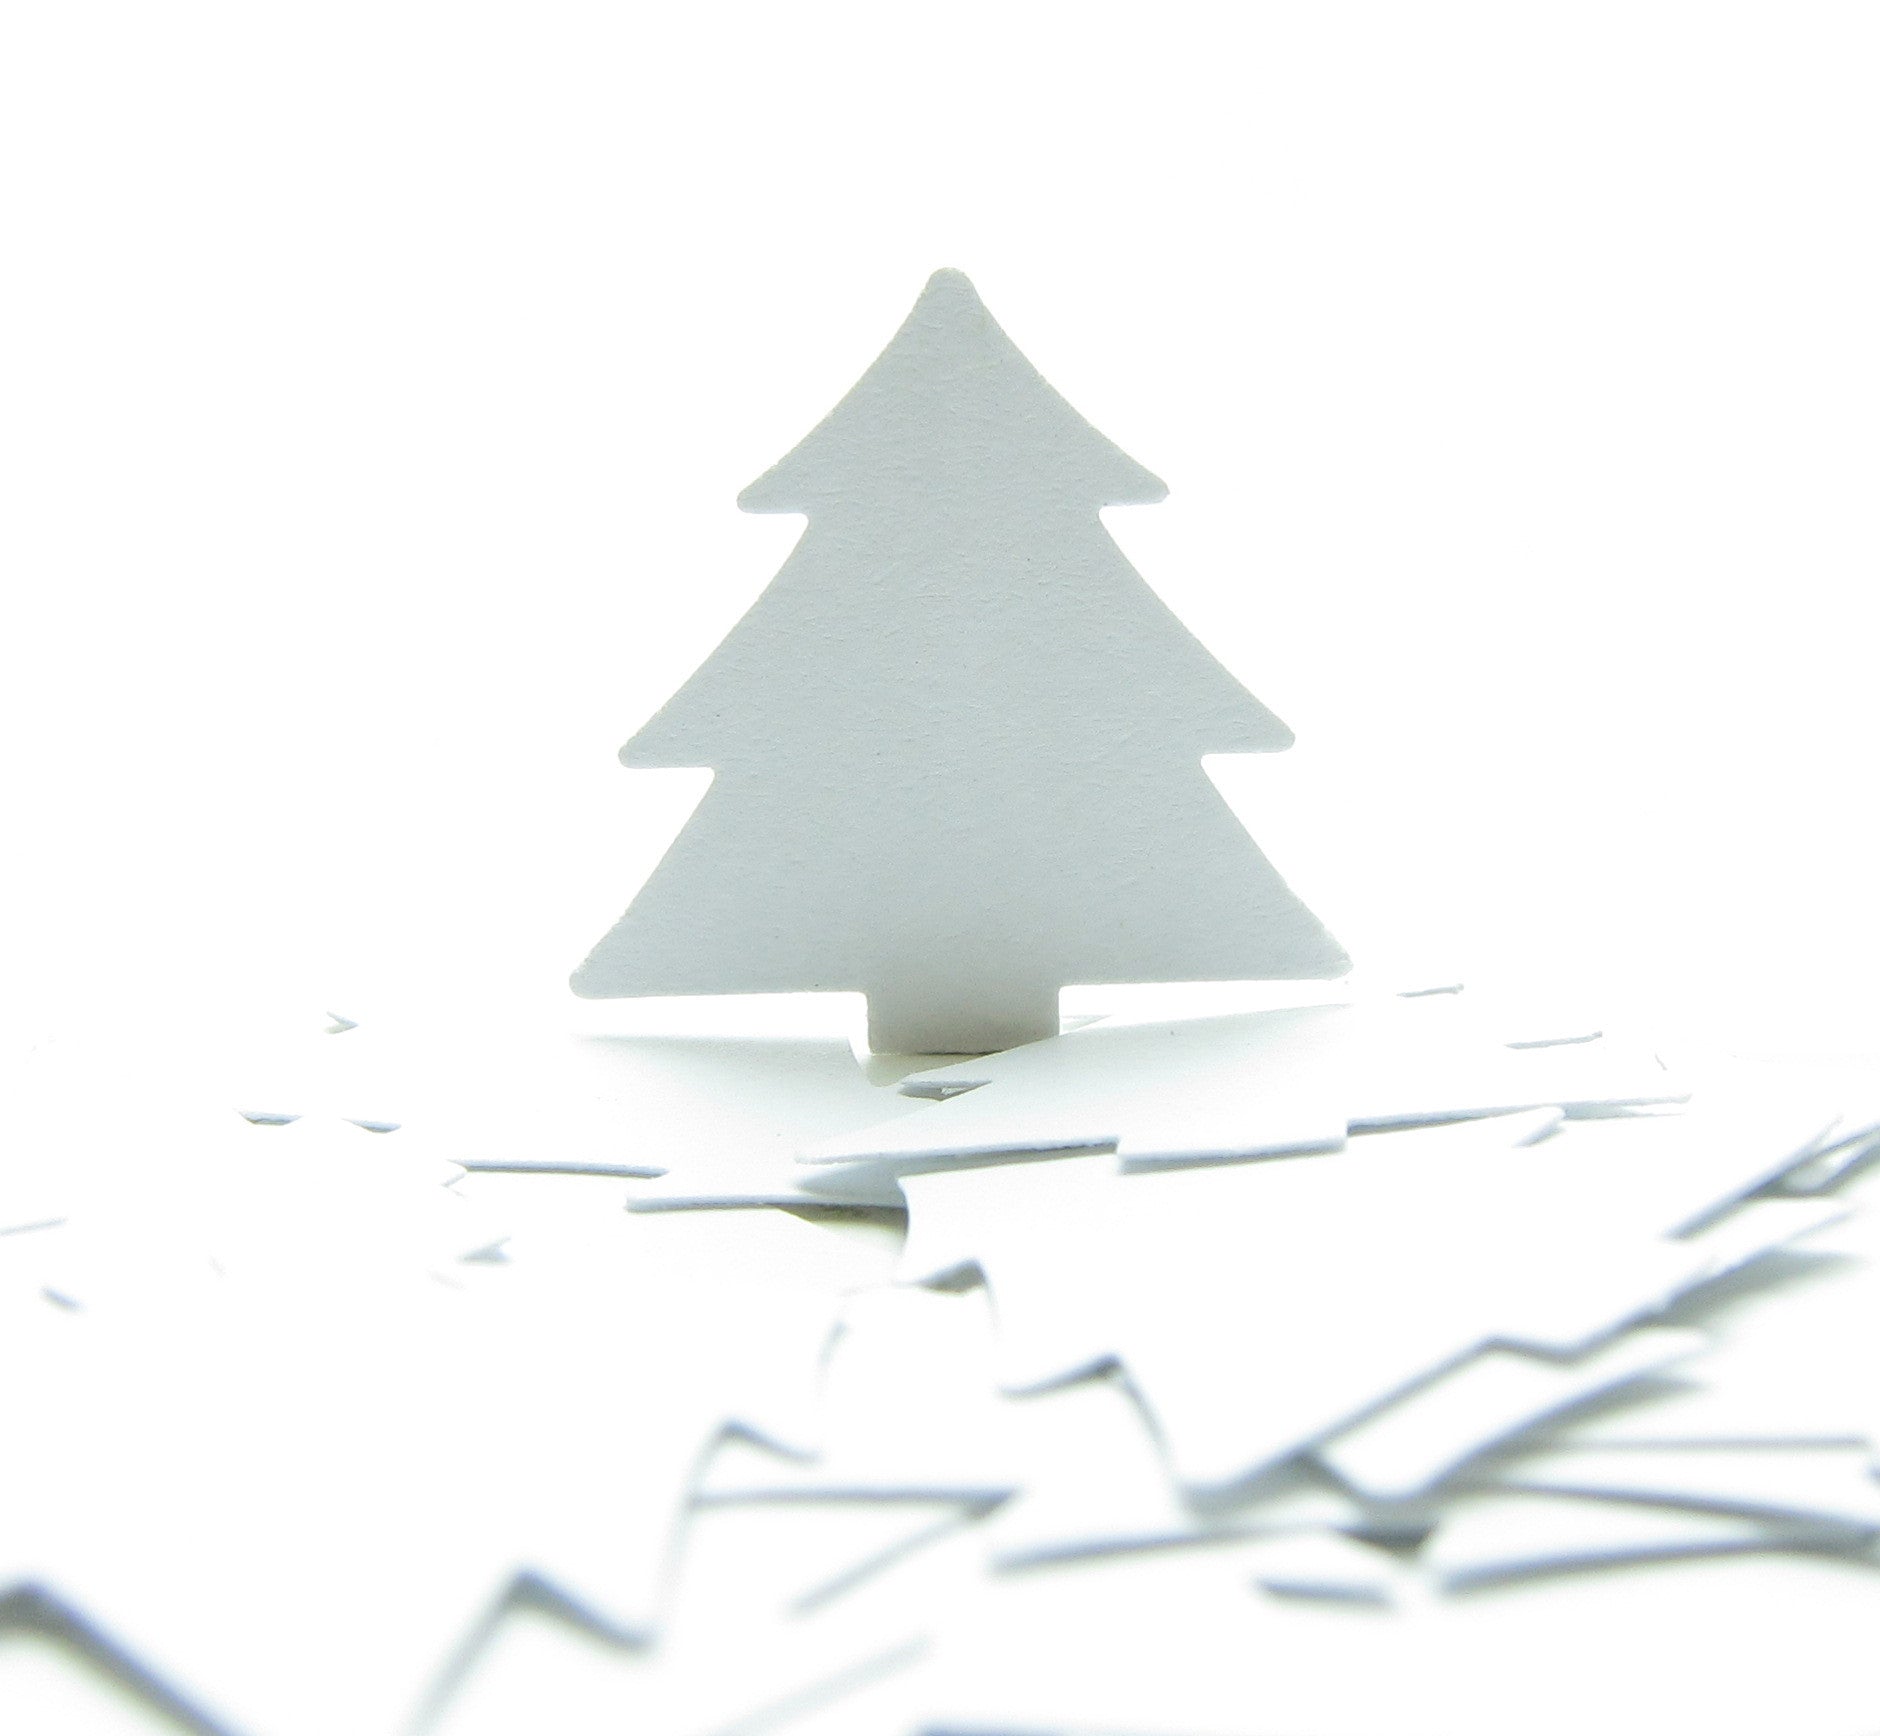 White Christmas - Die Cuts Scrapbook Christmas Ephemera Cutouts